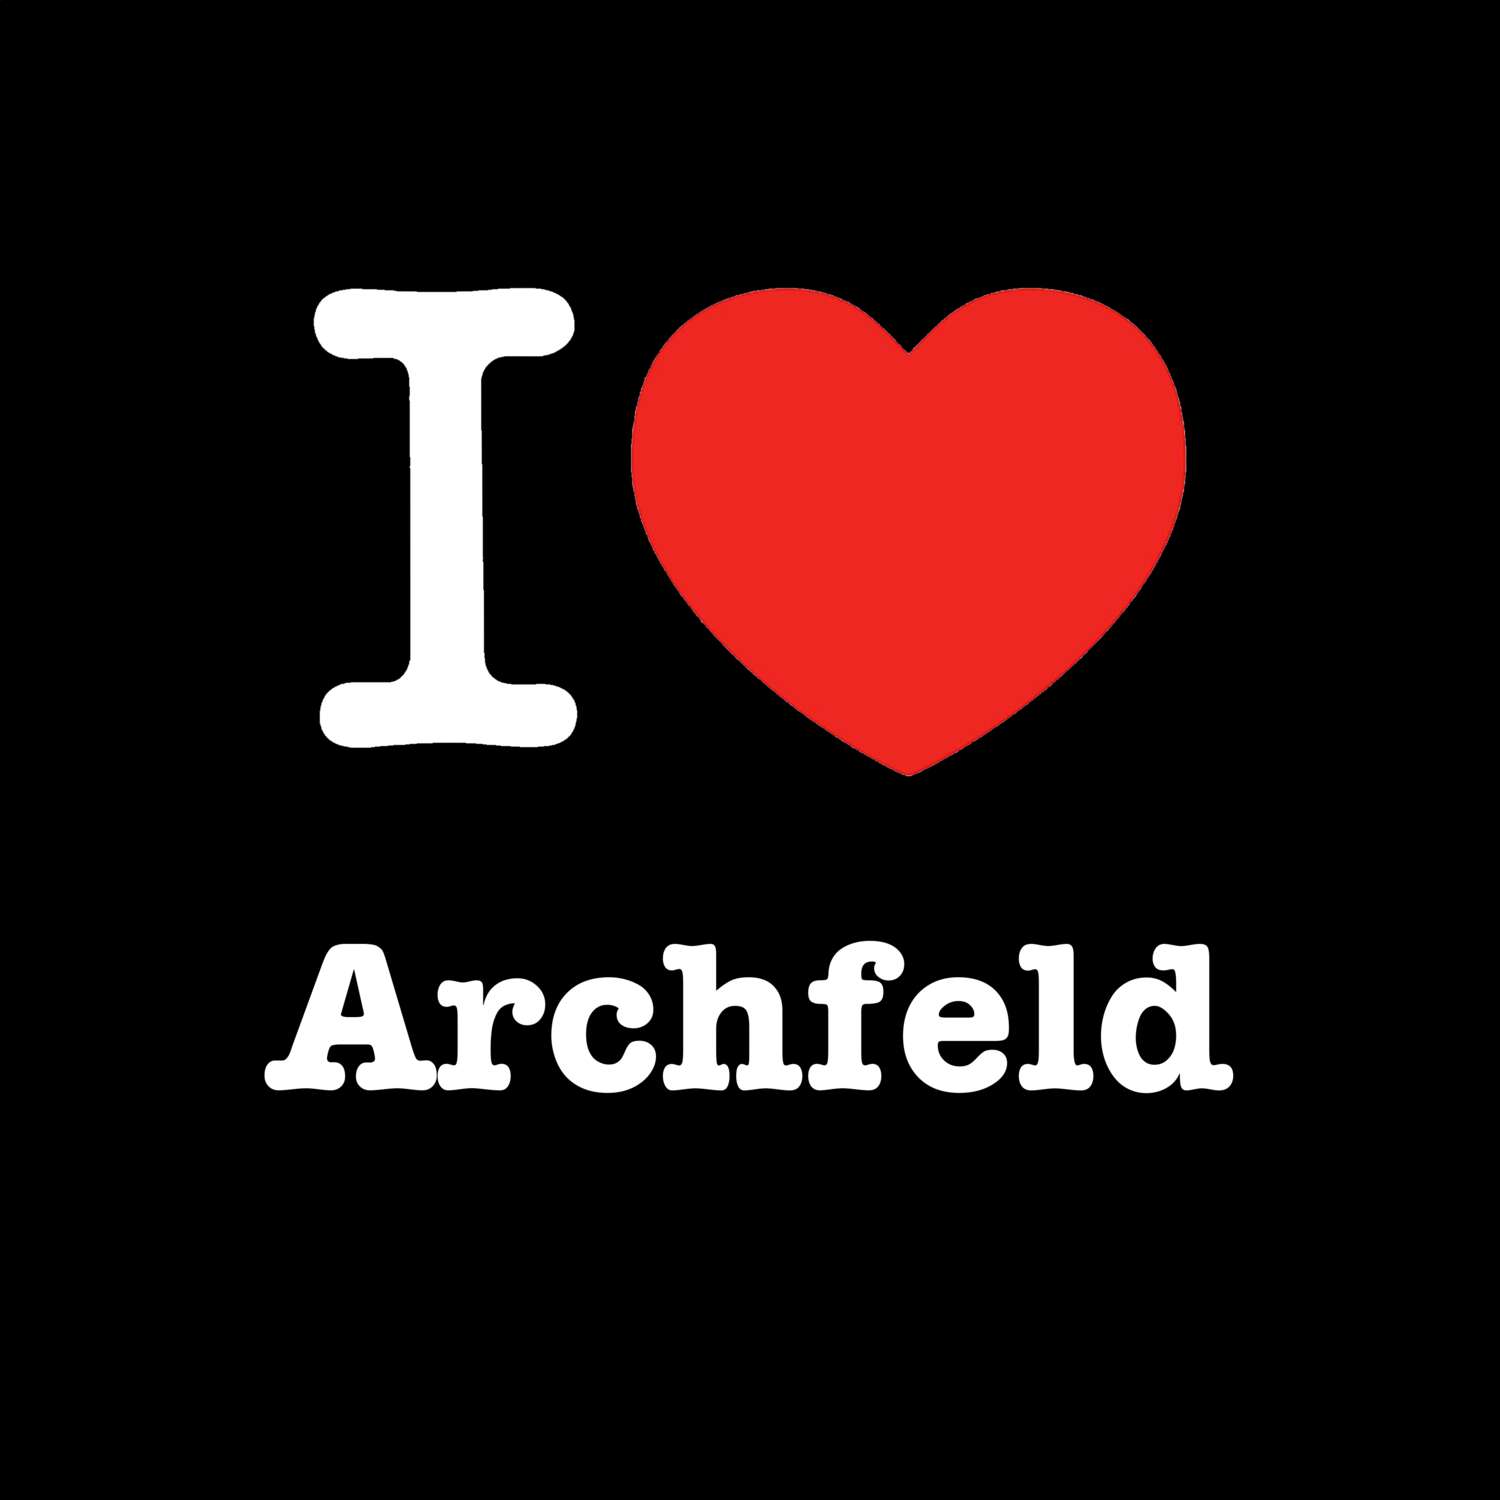 Archfeld T-Shirt »I love«